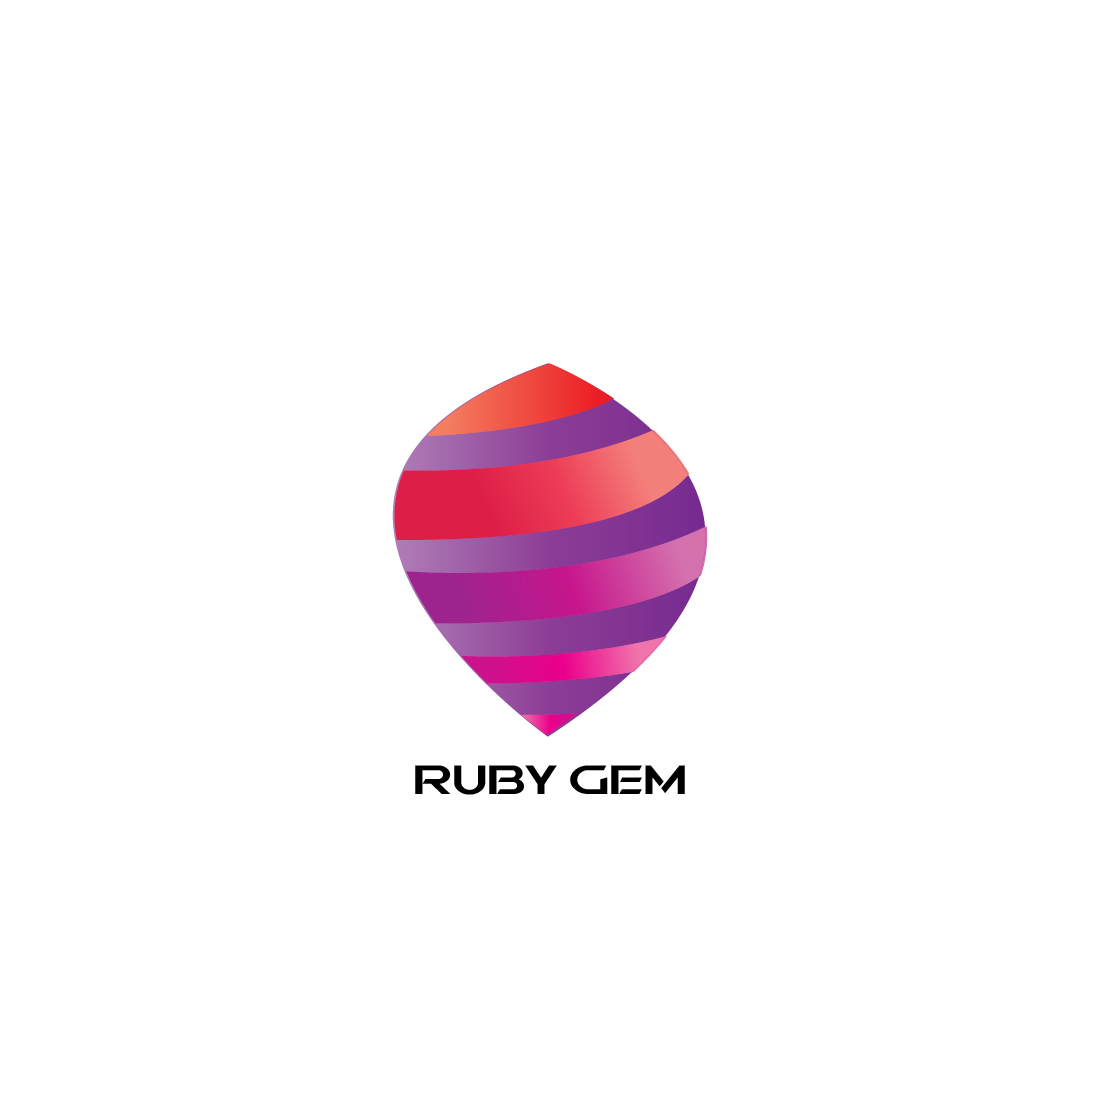 RUBY GEM cover image.